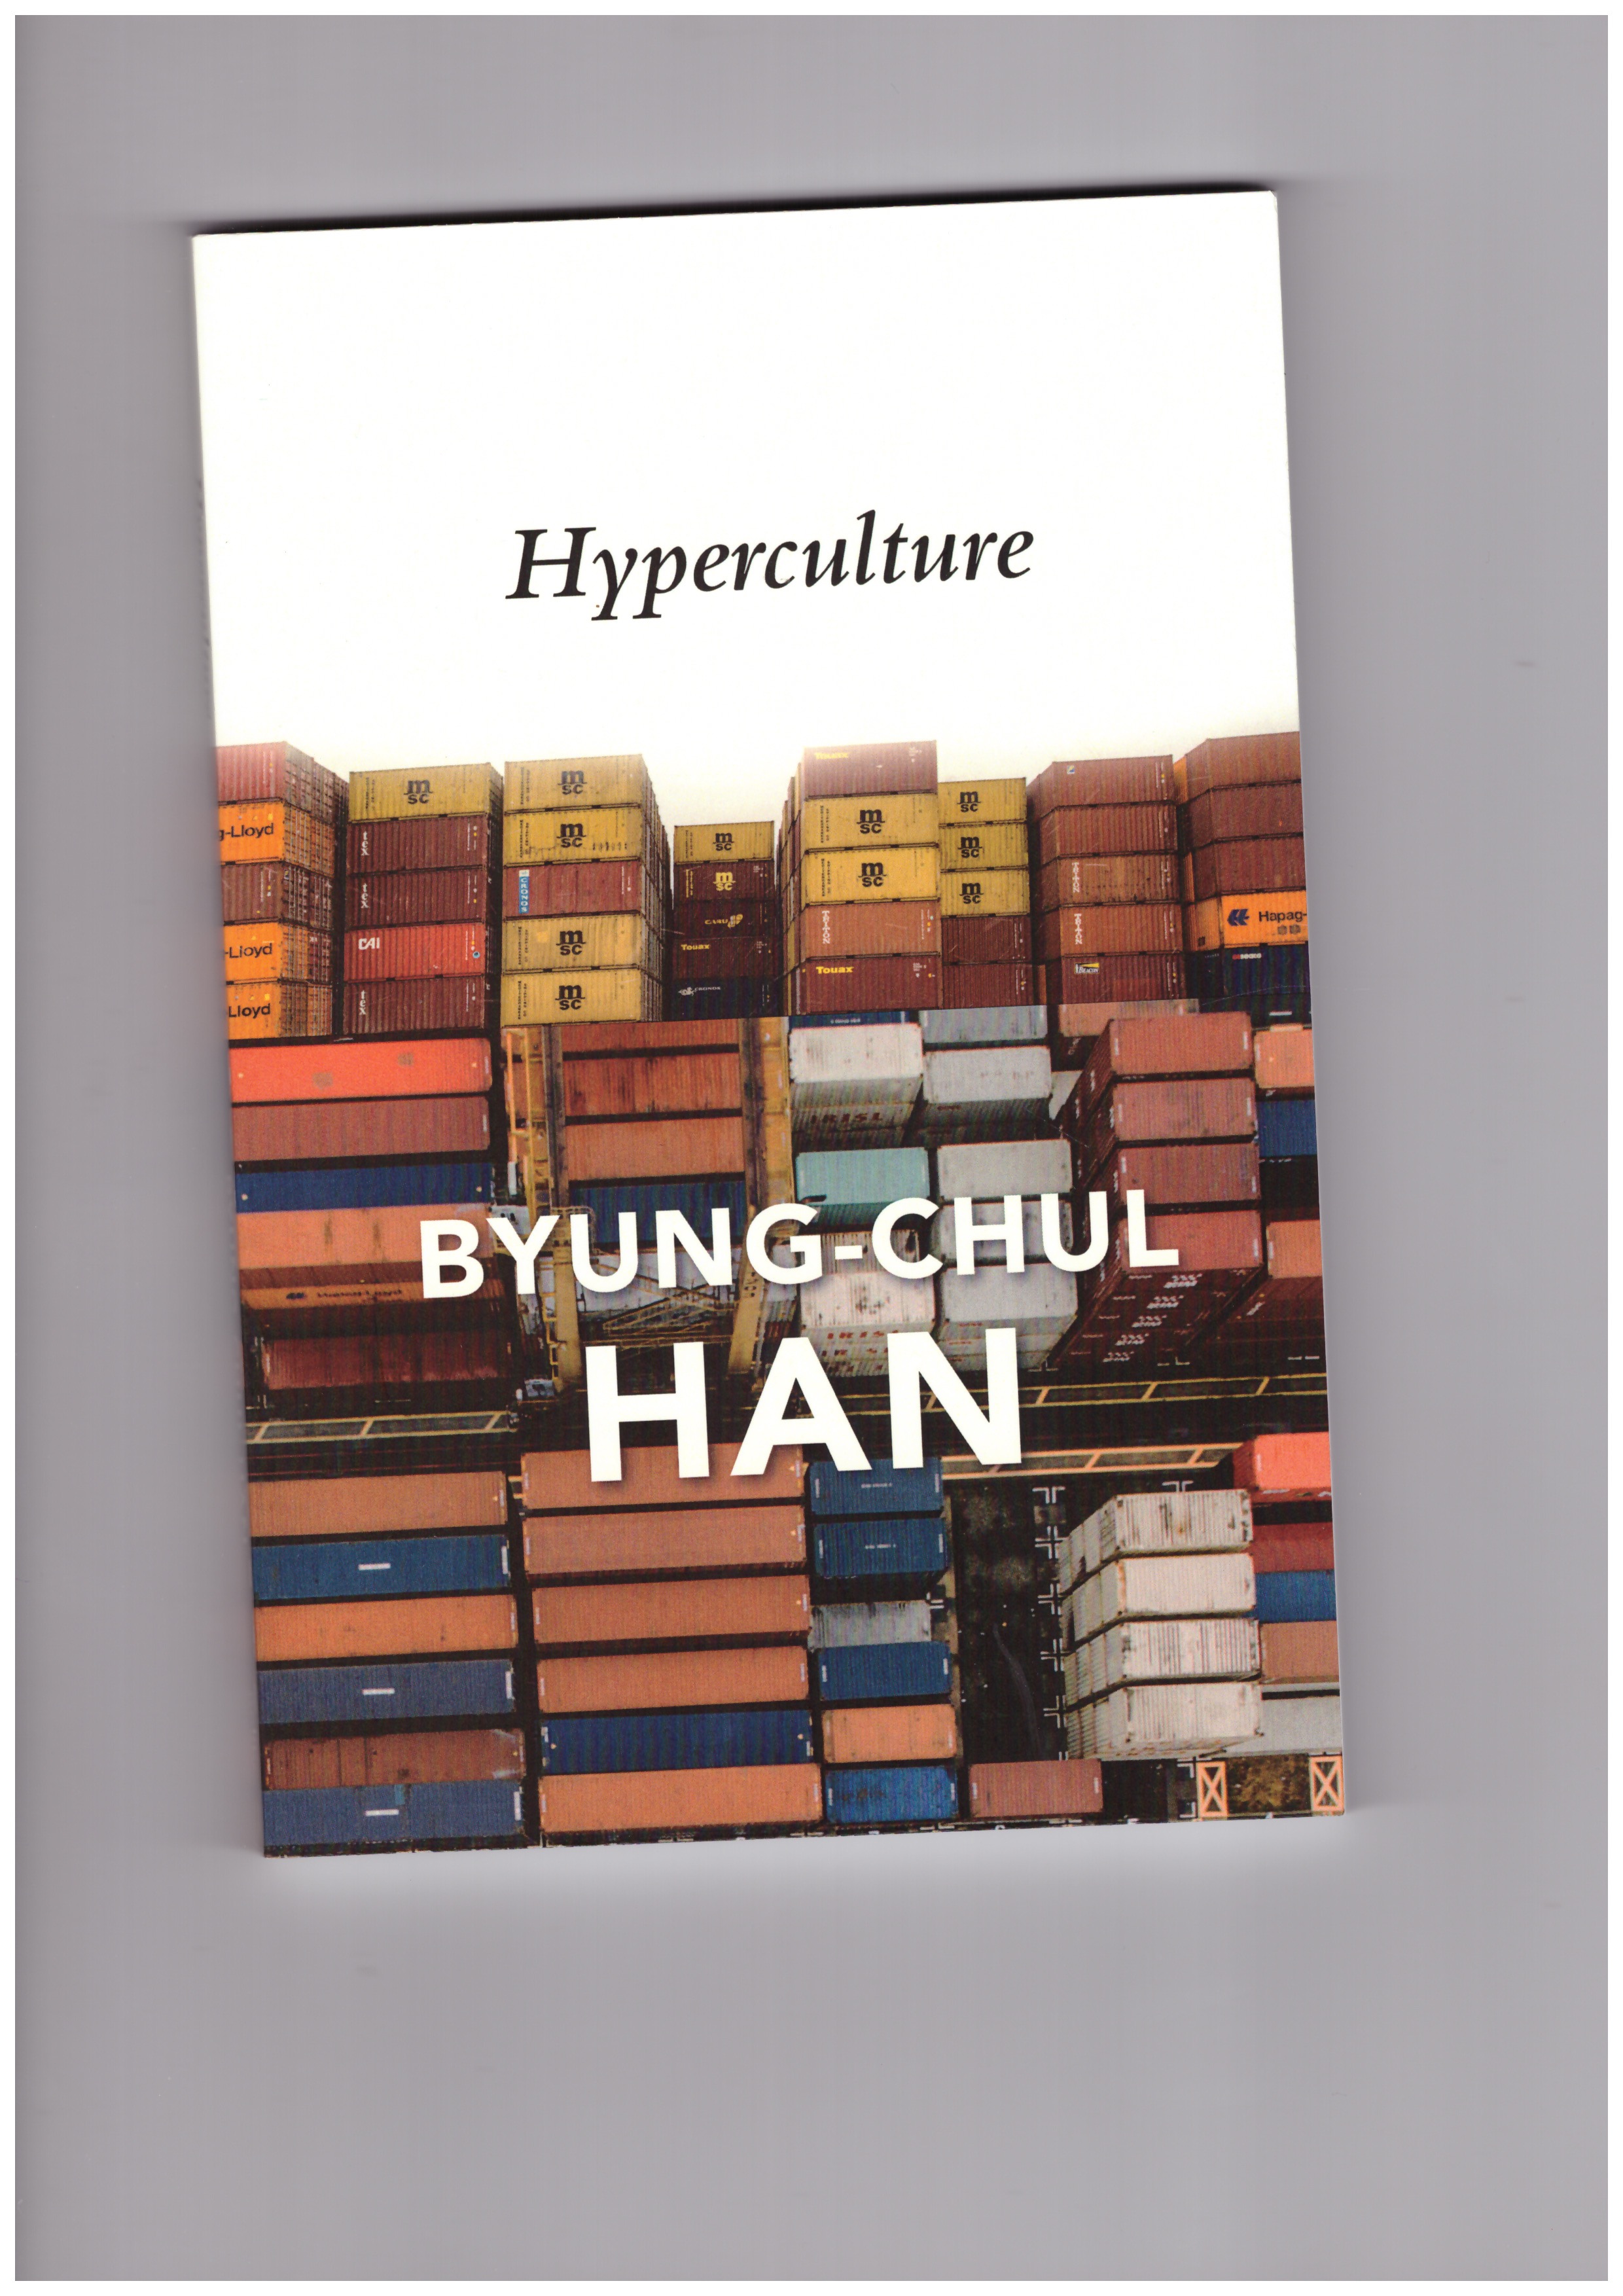 HAN, Byung-Chul - Hyperculture